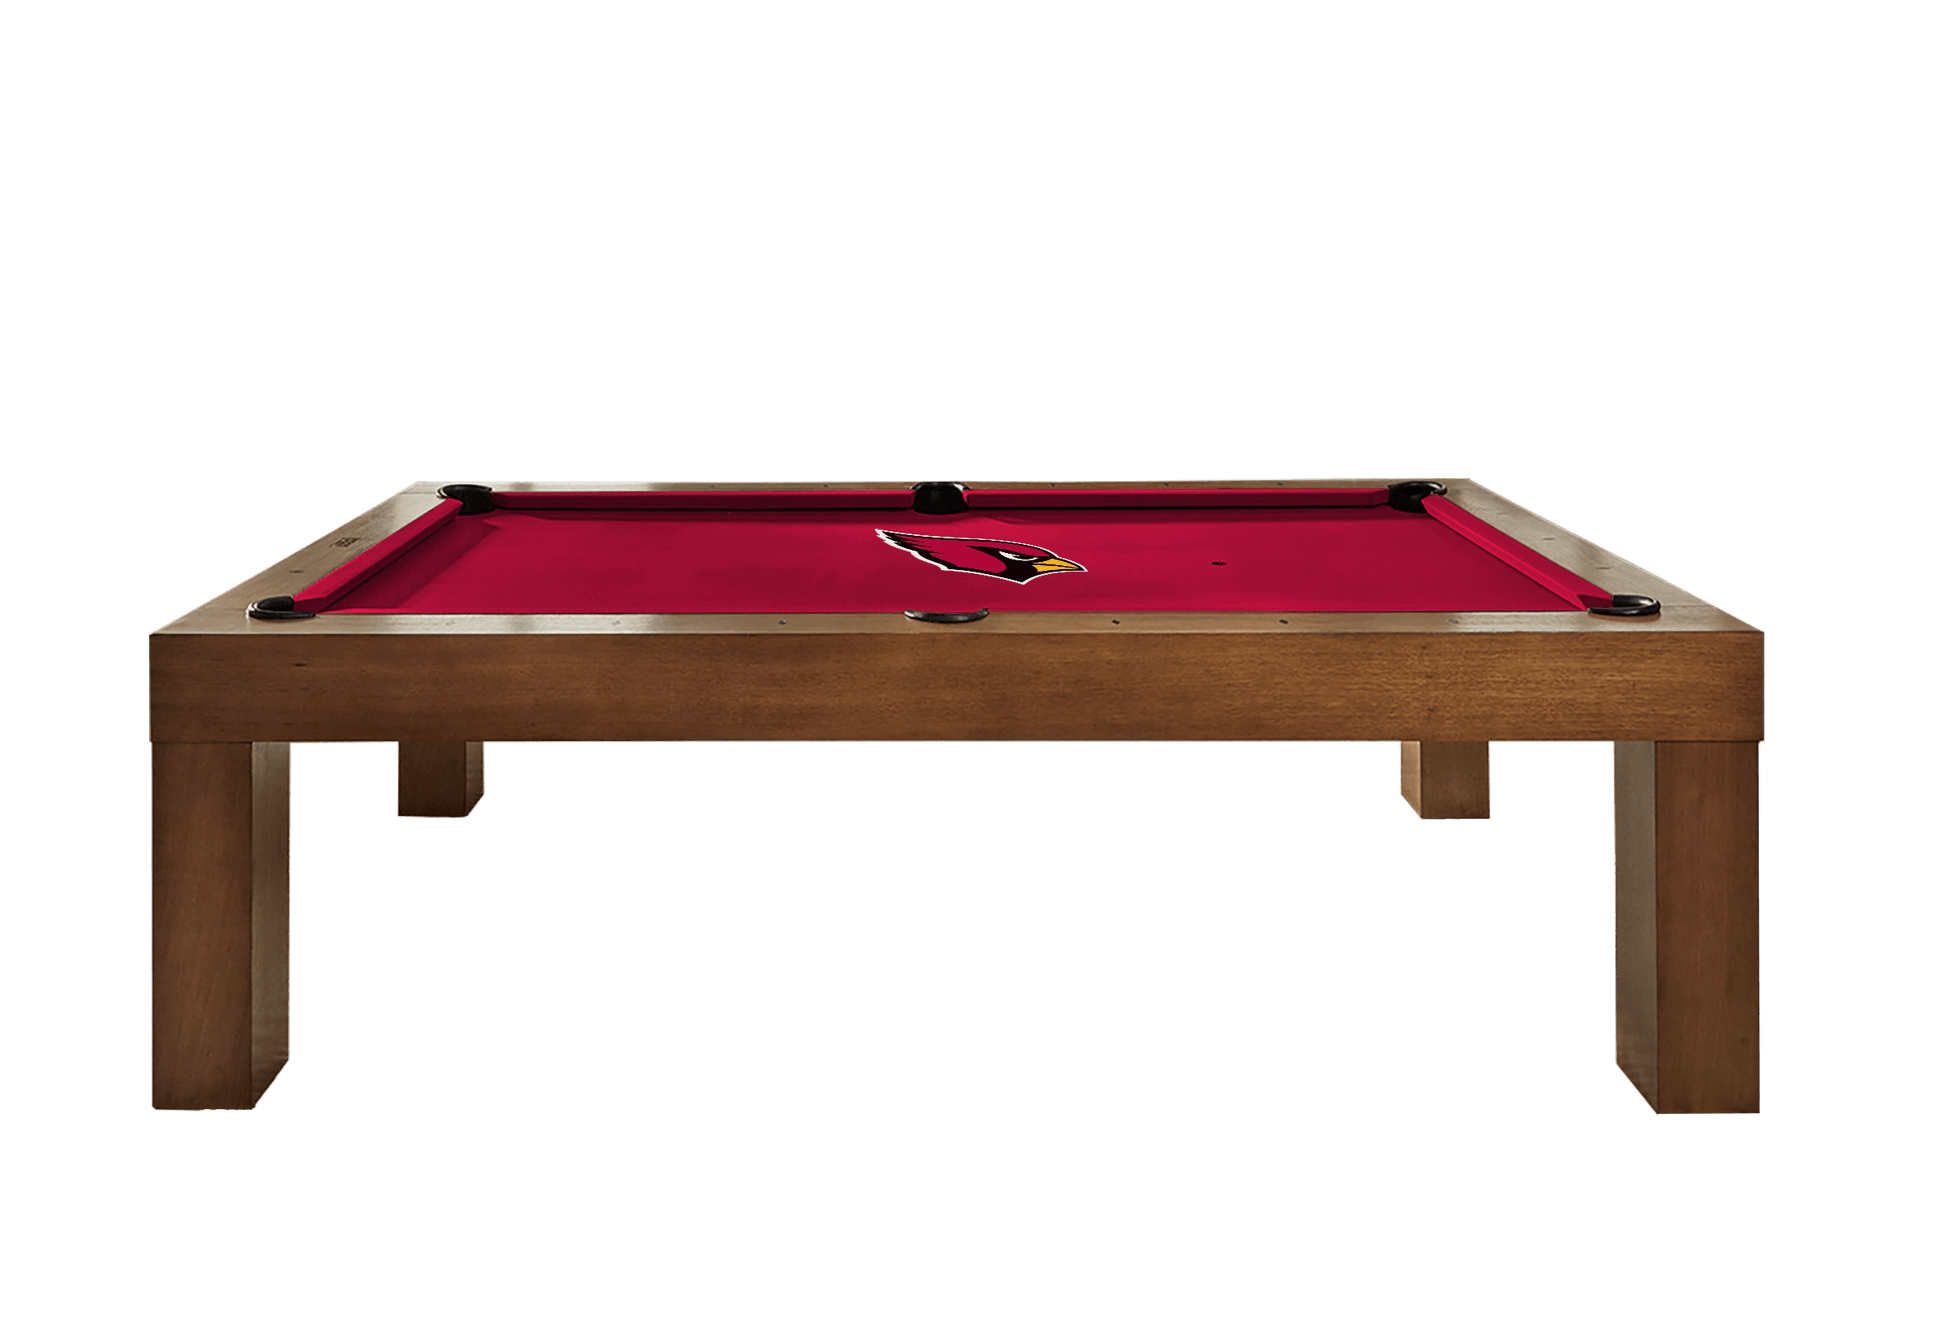 Arizona Cardinals Premium Pool Table Bundle - Walnut Pool Bundle Home Arcade Games   